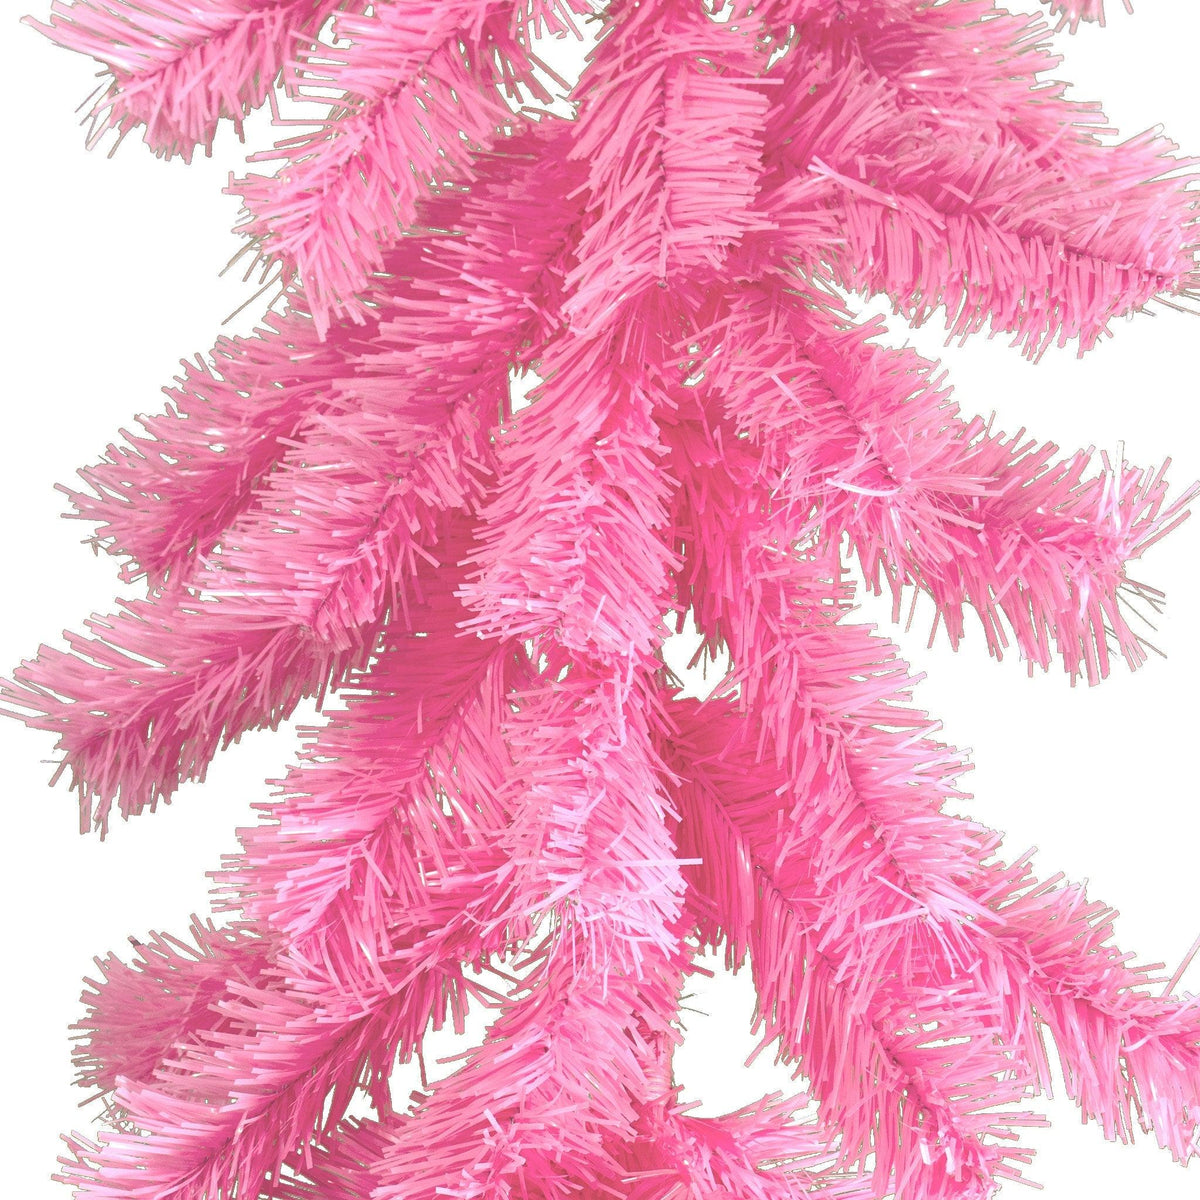 Closeup photo of the pink tinsel brush made on the Pink Brush Garlands at Lee Display.